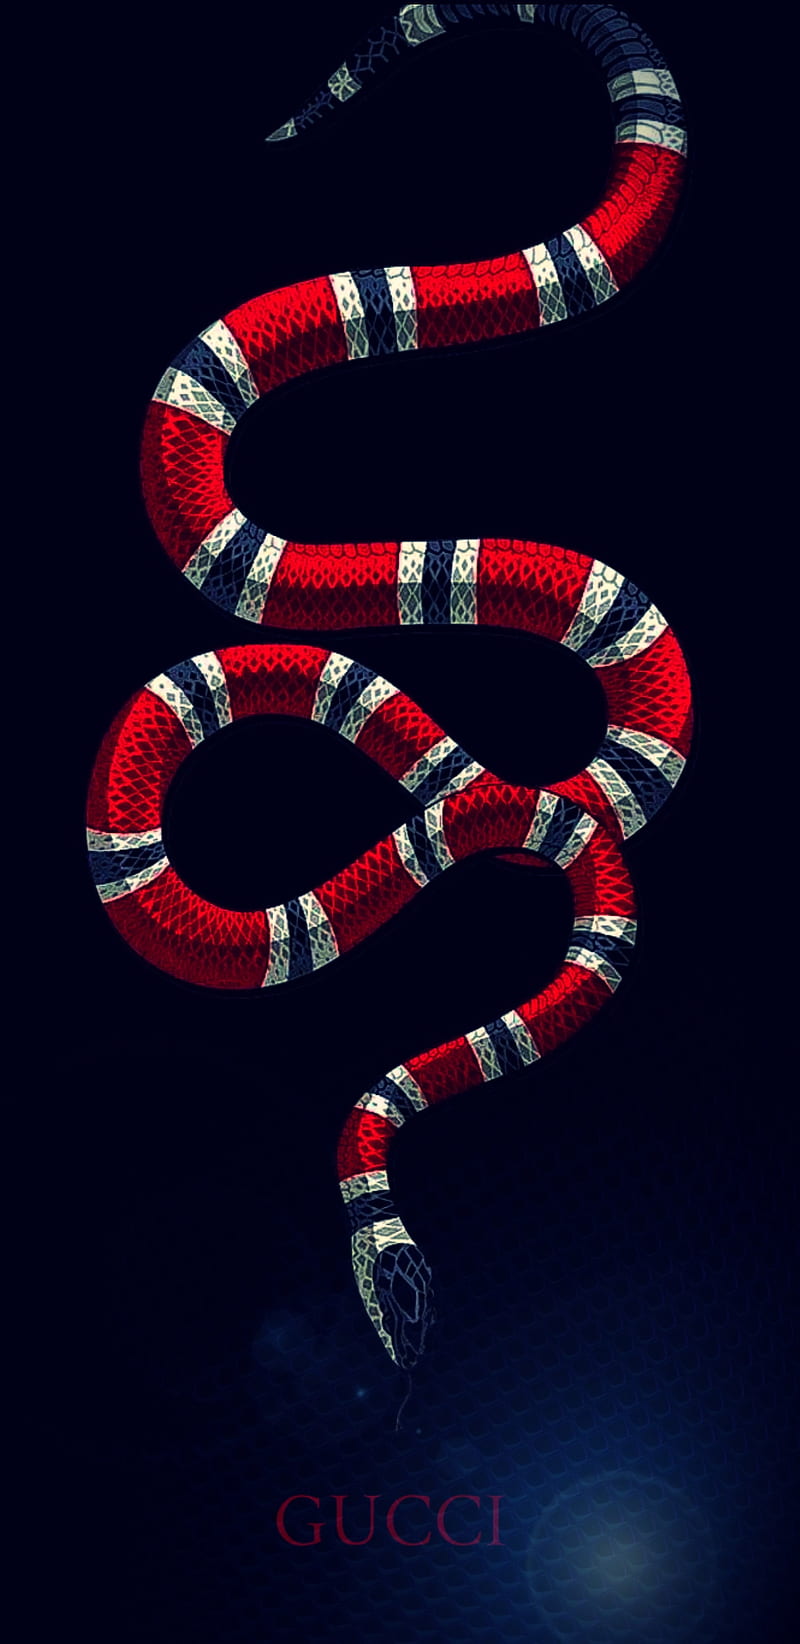 Supreme Red Snake wallpaper by Sneks99 - Download on ZEDGE™